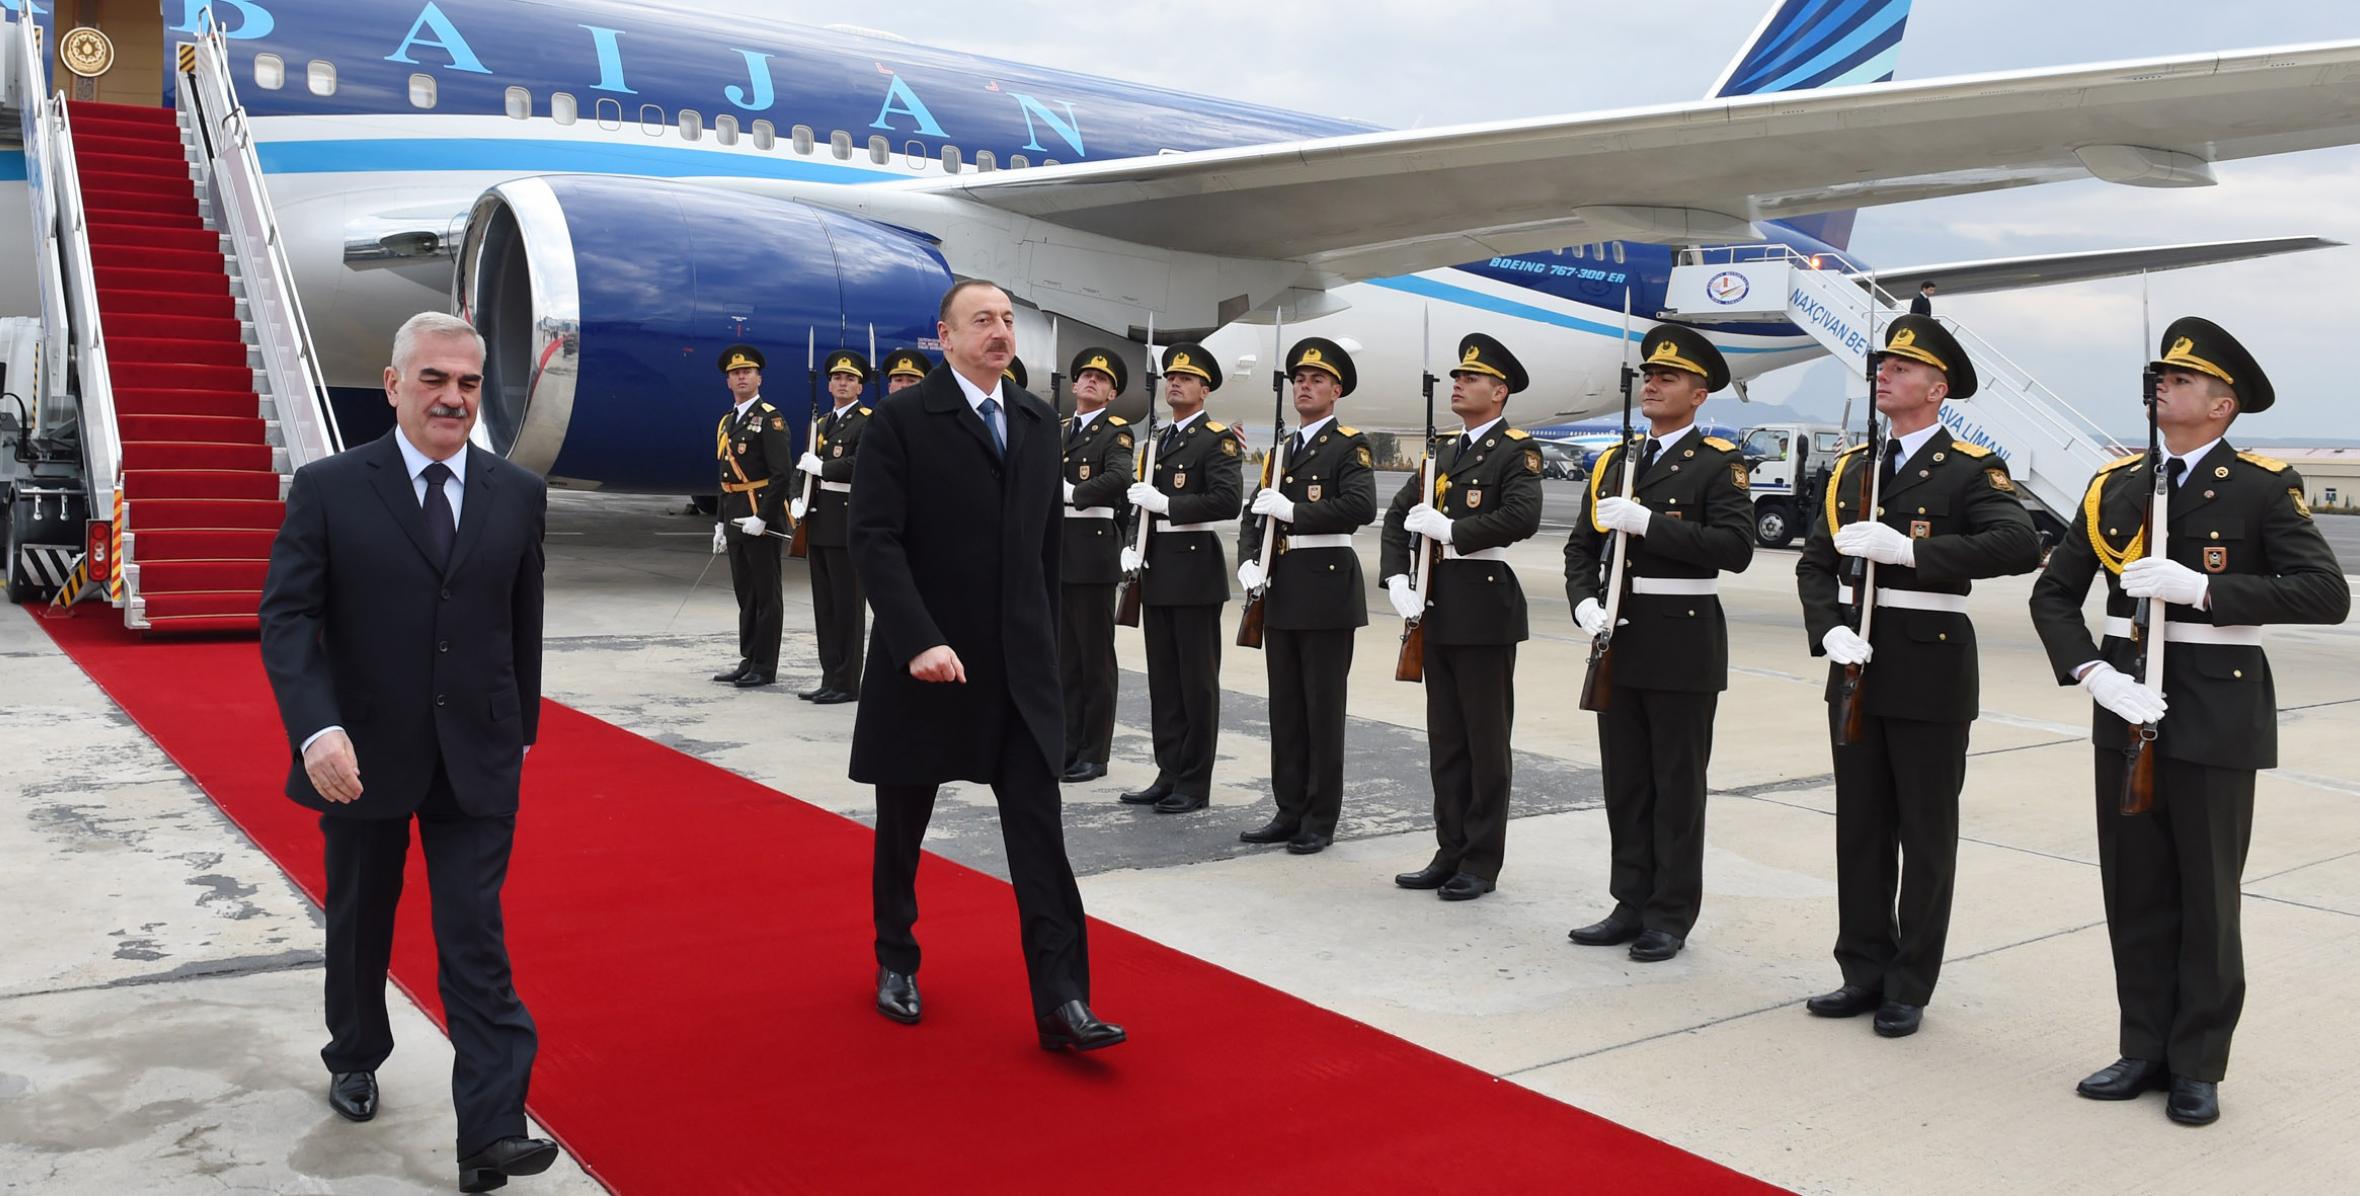 Ilham Aliyev arrived in Nakhchivan Autonomous Republic on a visit